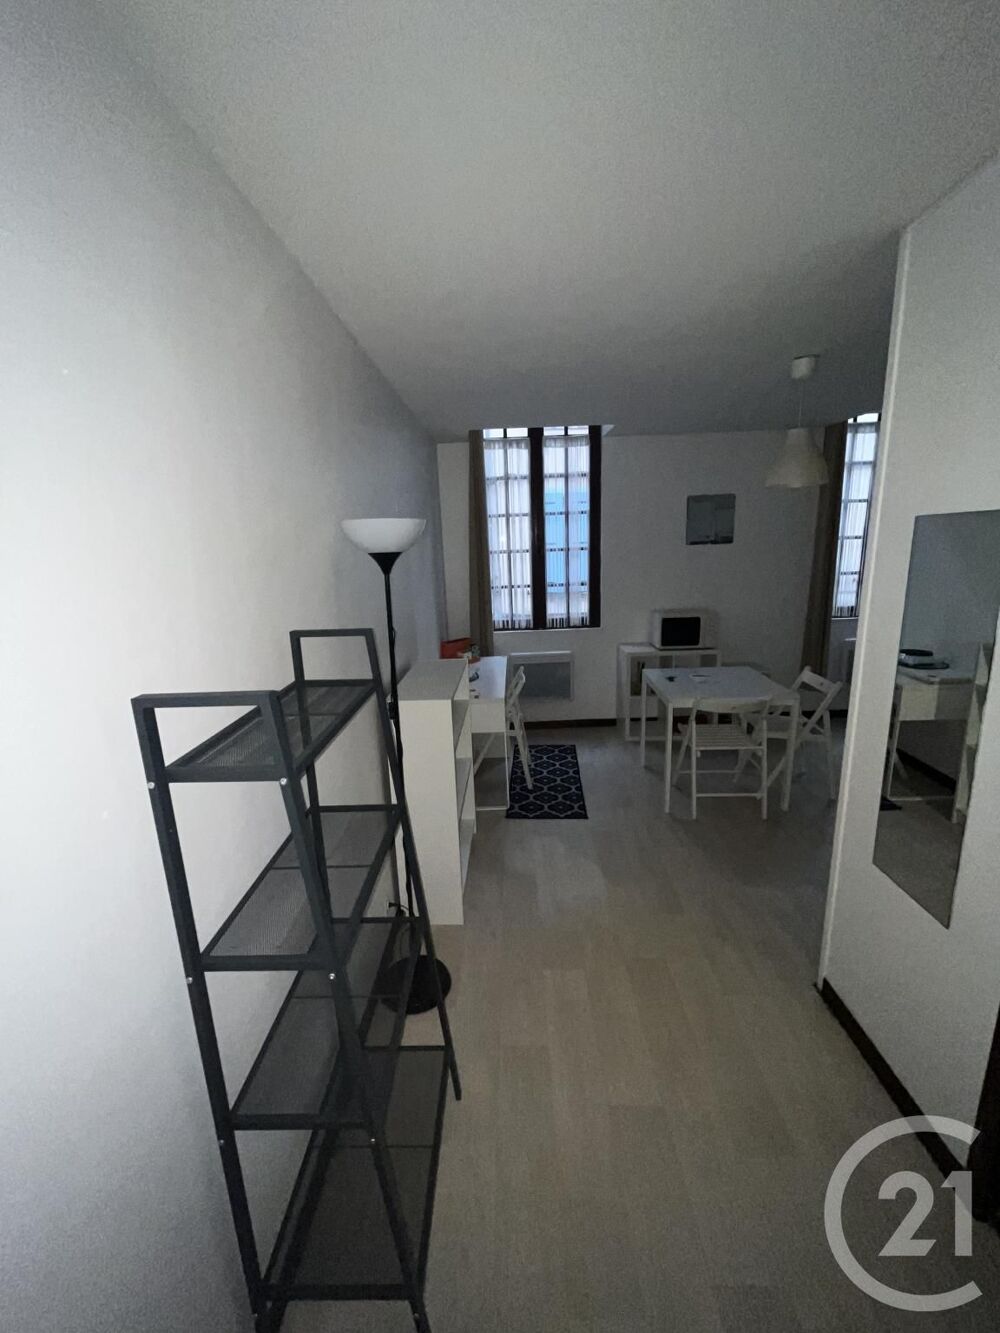 location Appartement - 1 pice(s) - 23 m Castres (81100)